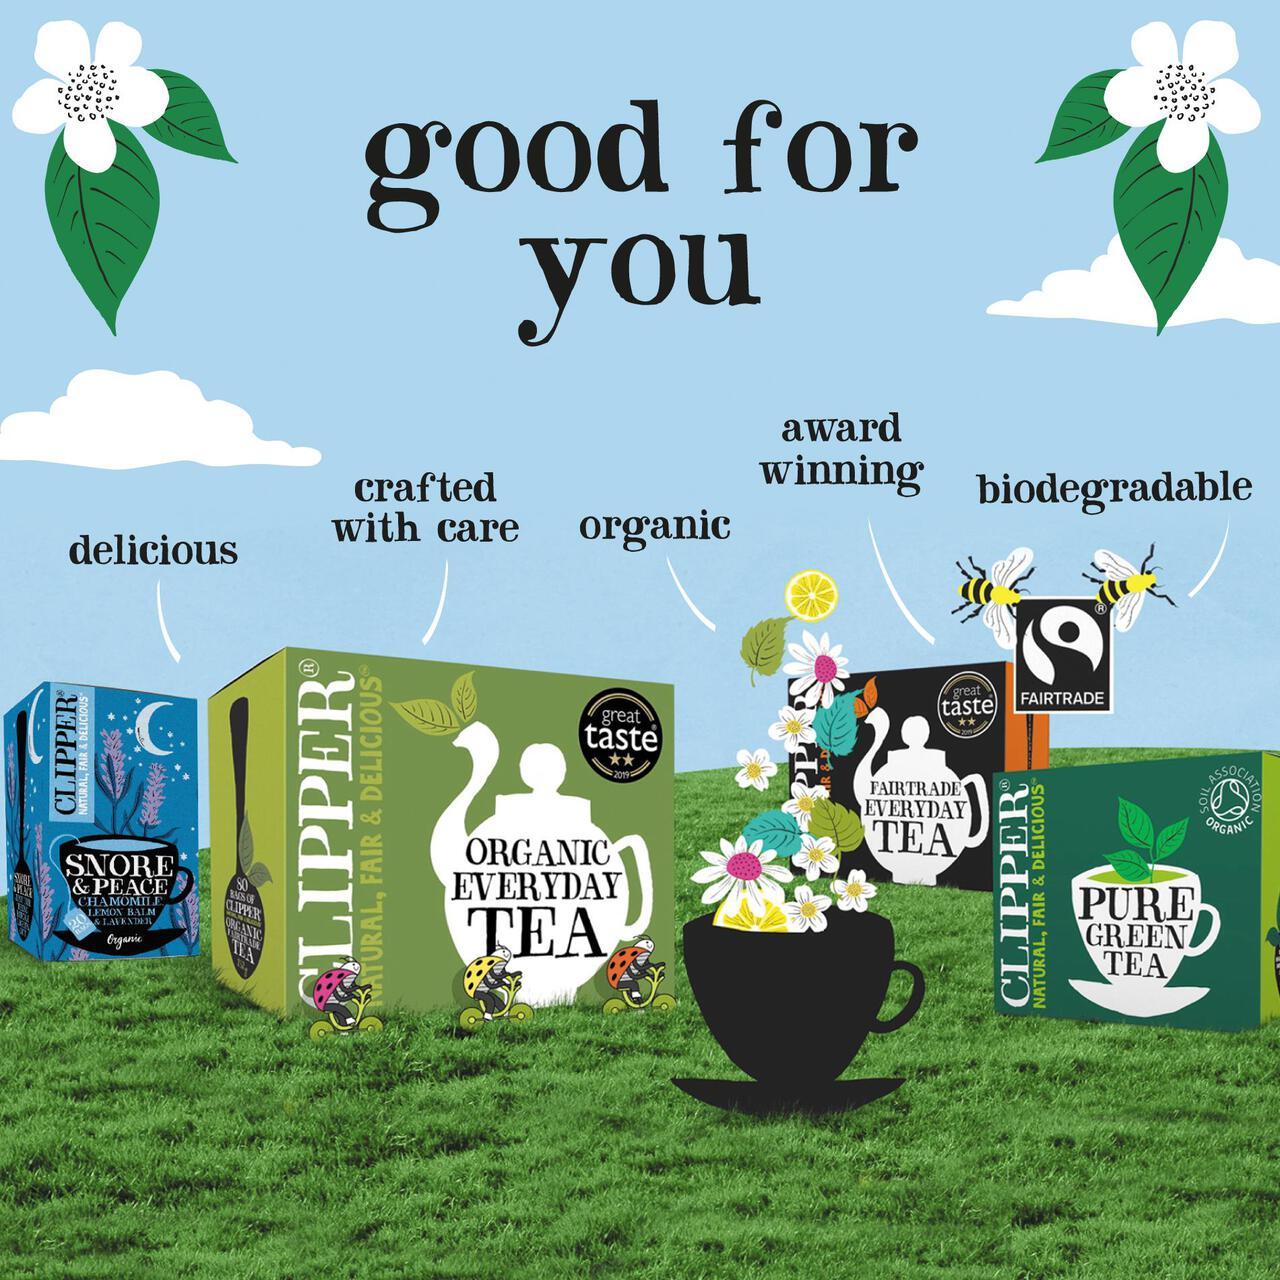 Clipper Organic & Fairtrade Decaffeinated Green Tea 40 per pack